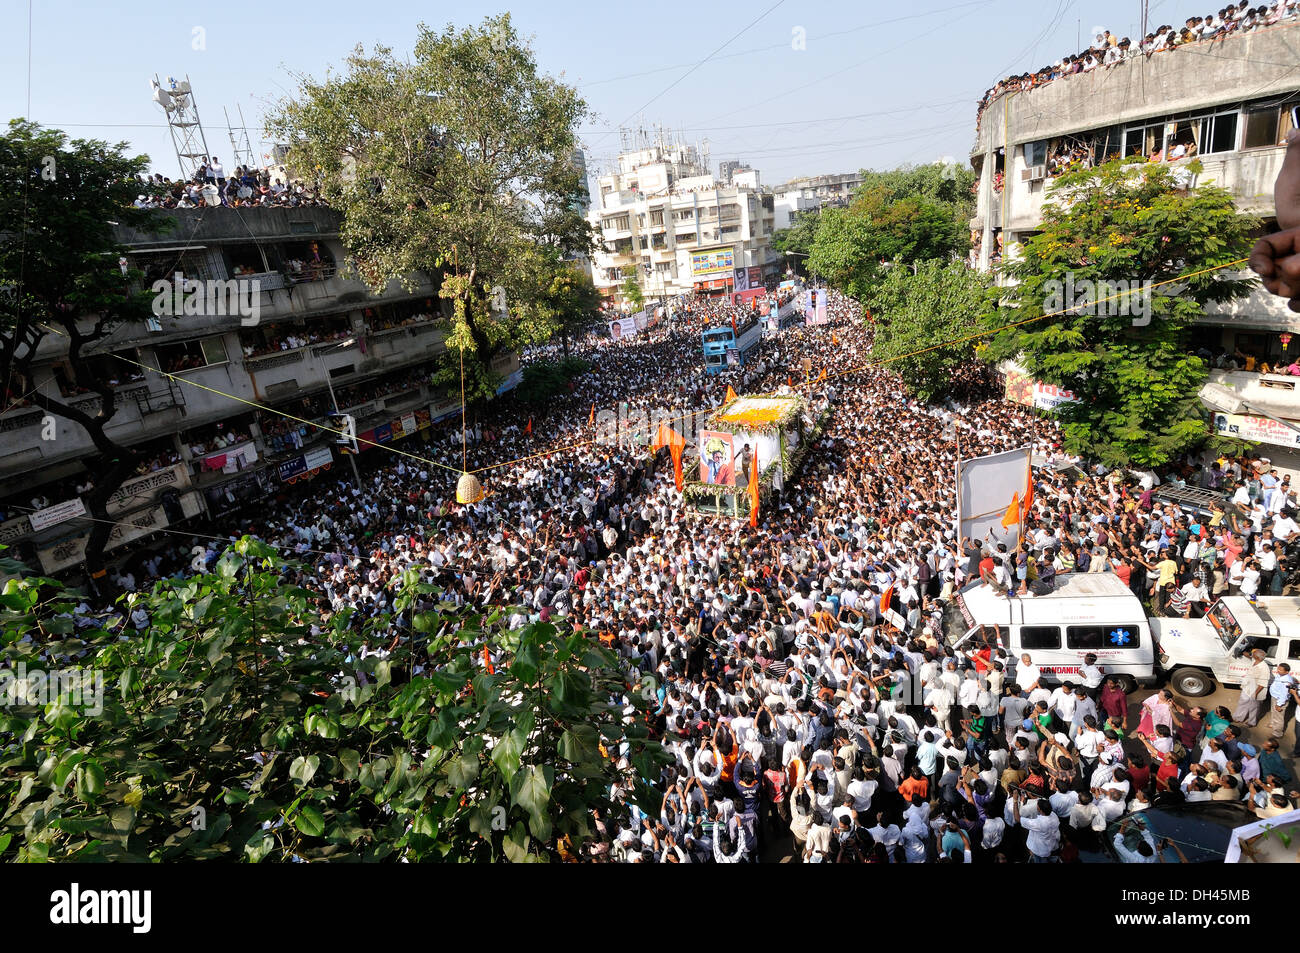 Balasaheb Thackeray Funeral Procession Crowd at dadar road mumbai maharashtra india November 2012 Stock Photo